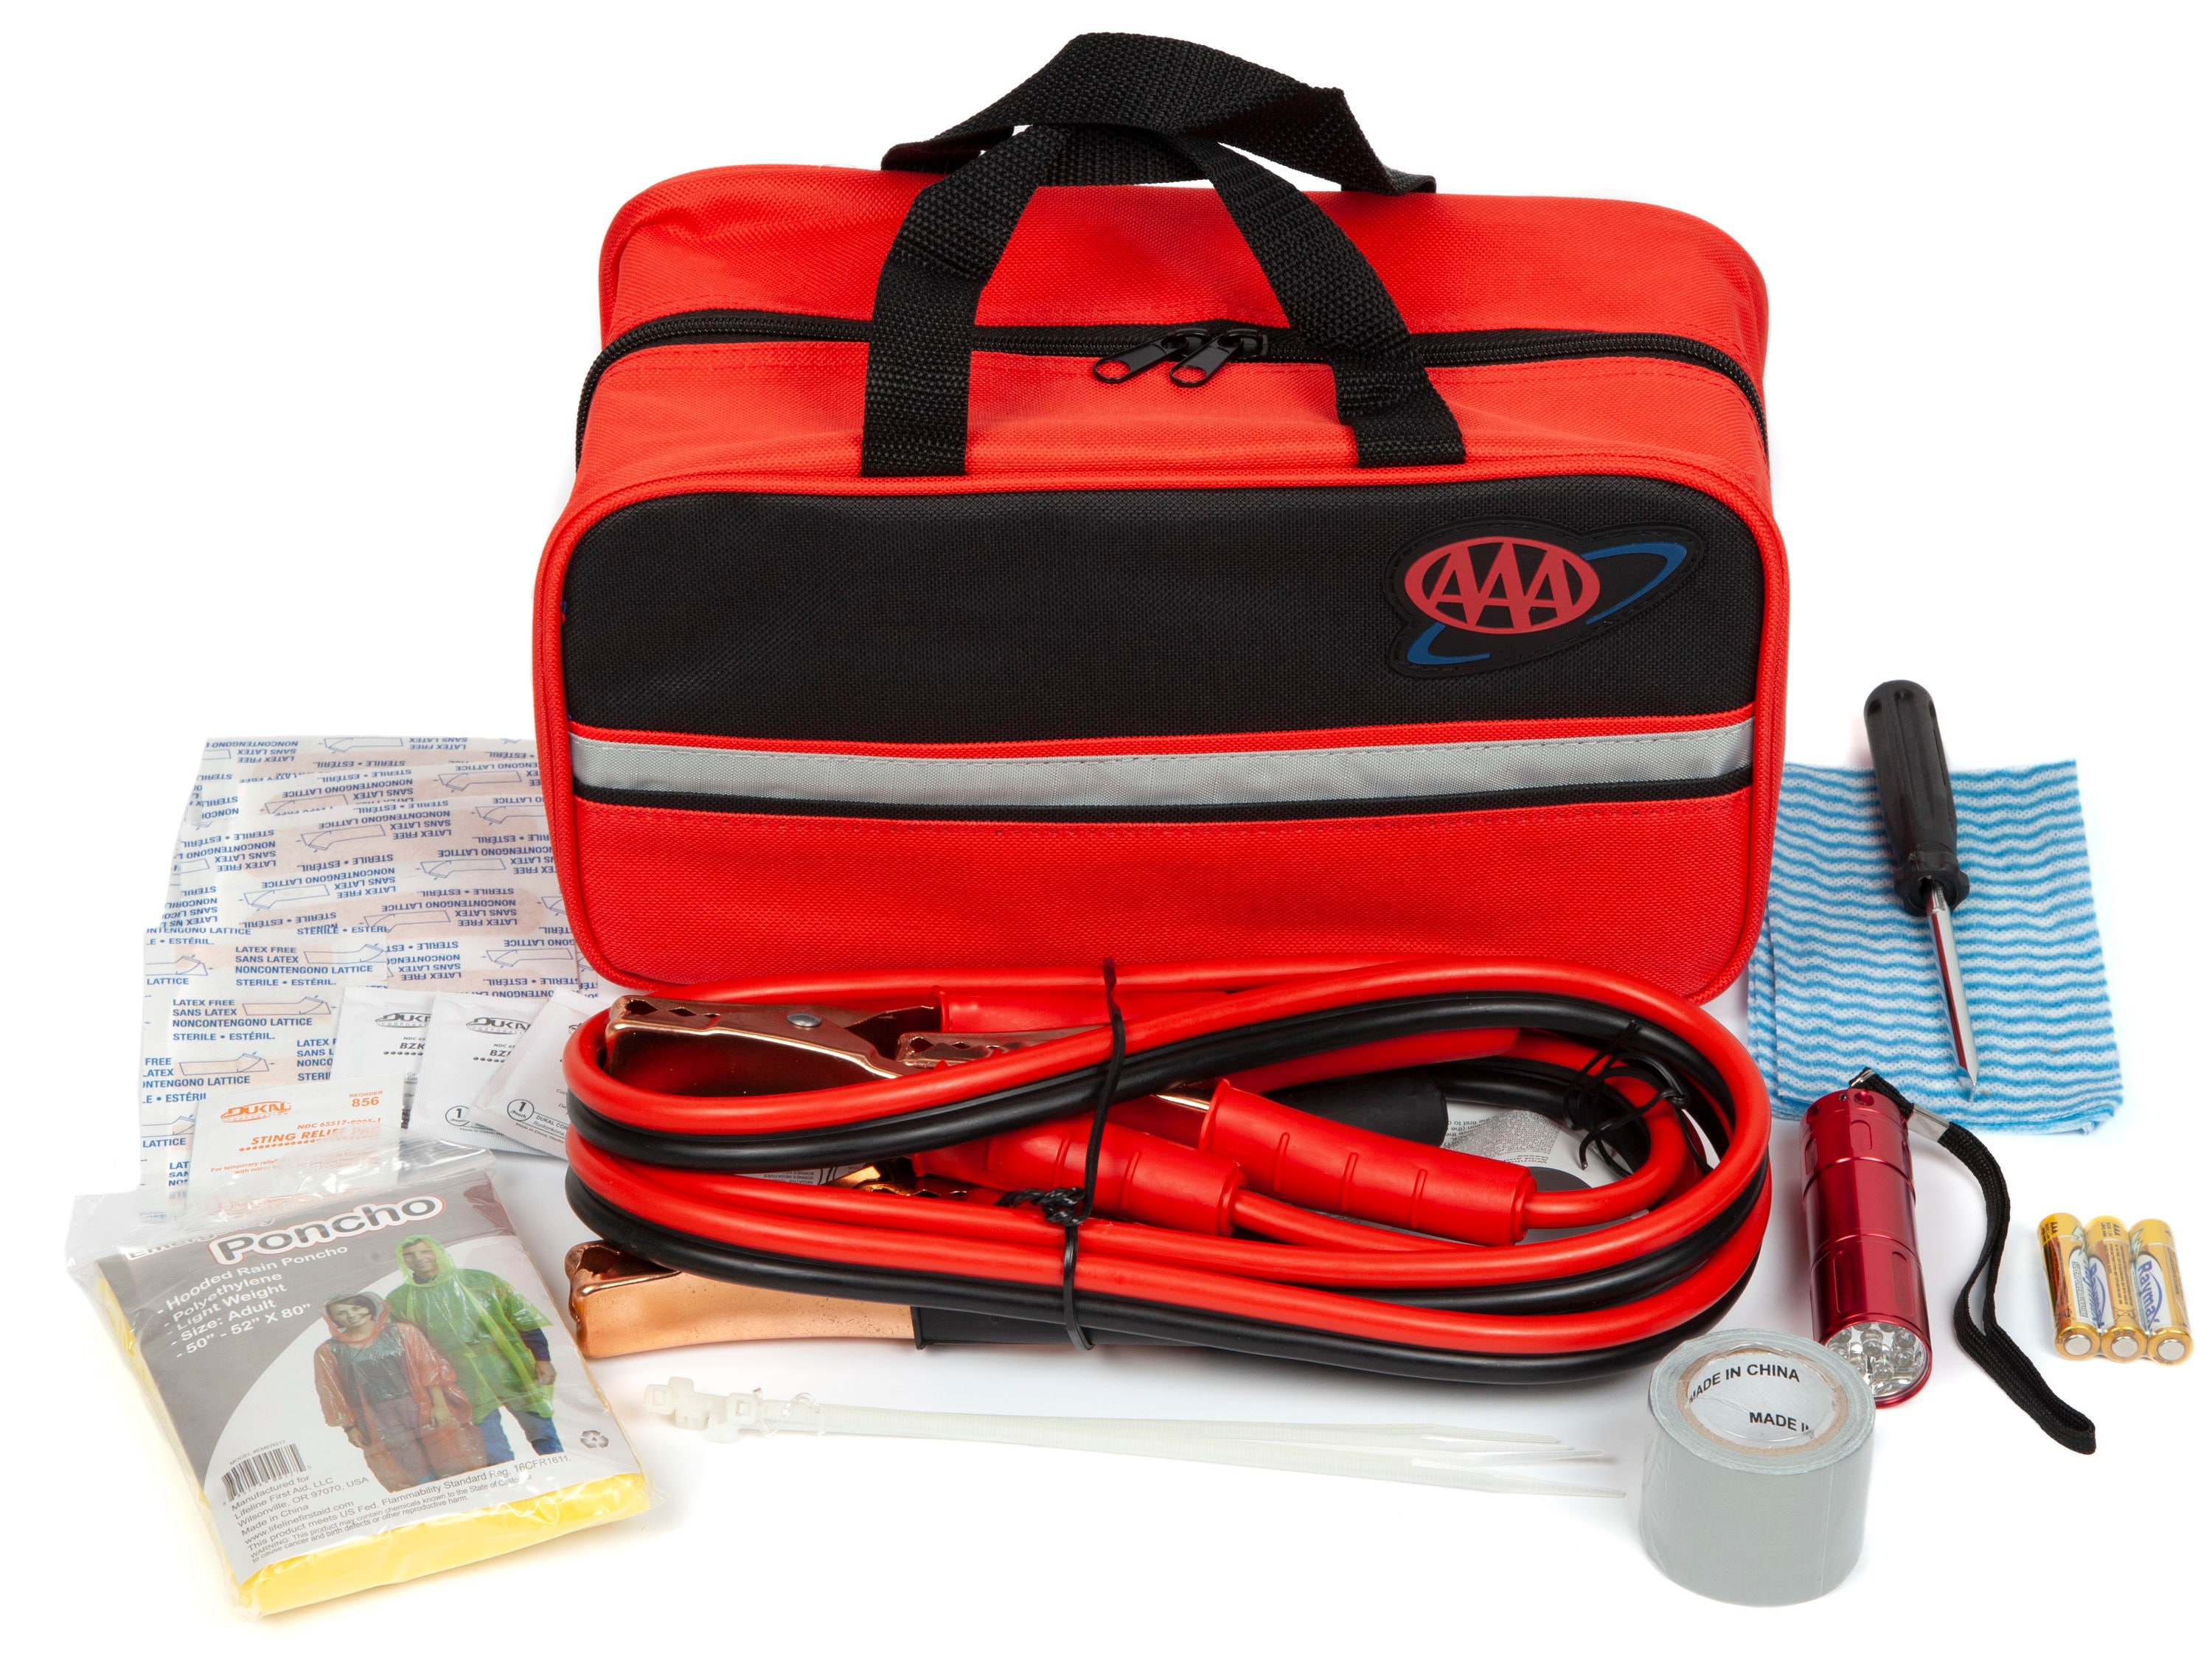 Car Emergency Kit - Roadside Emergency Kits & Car Safety Kits